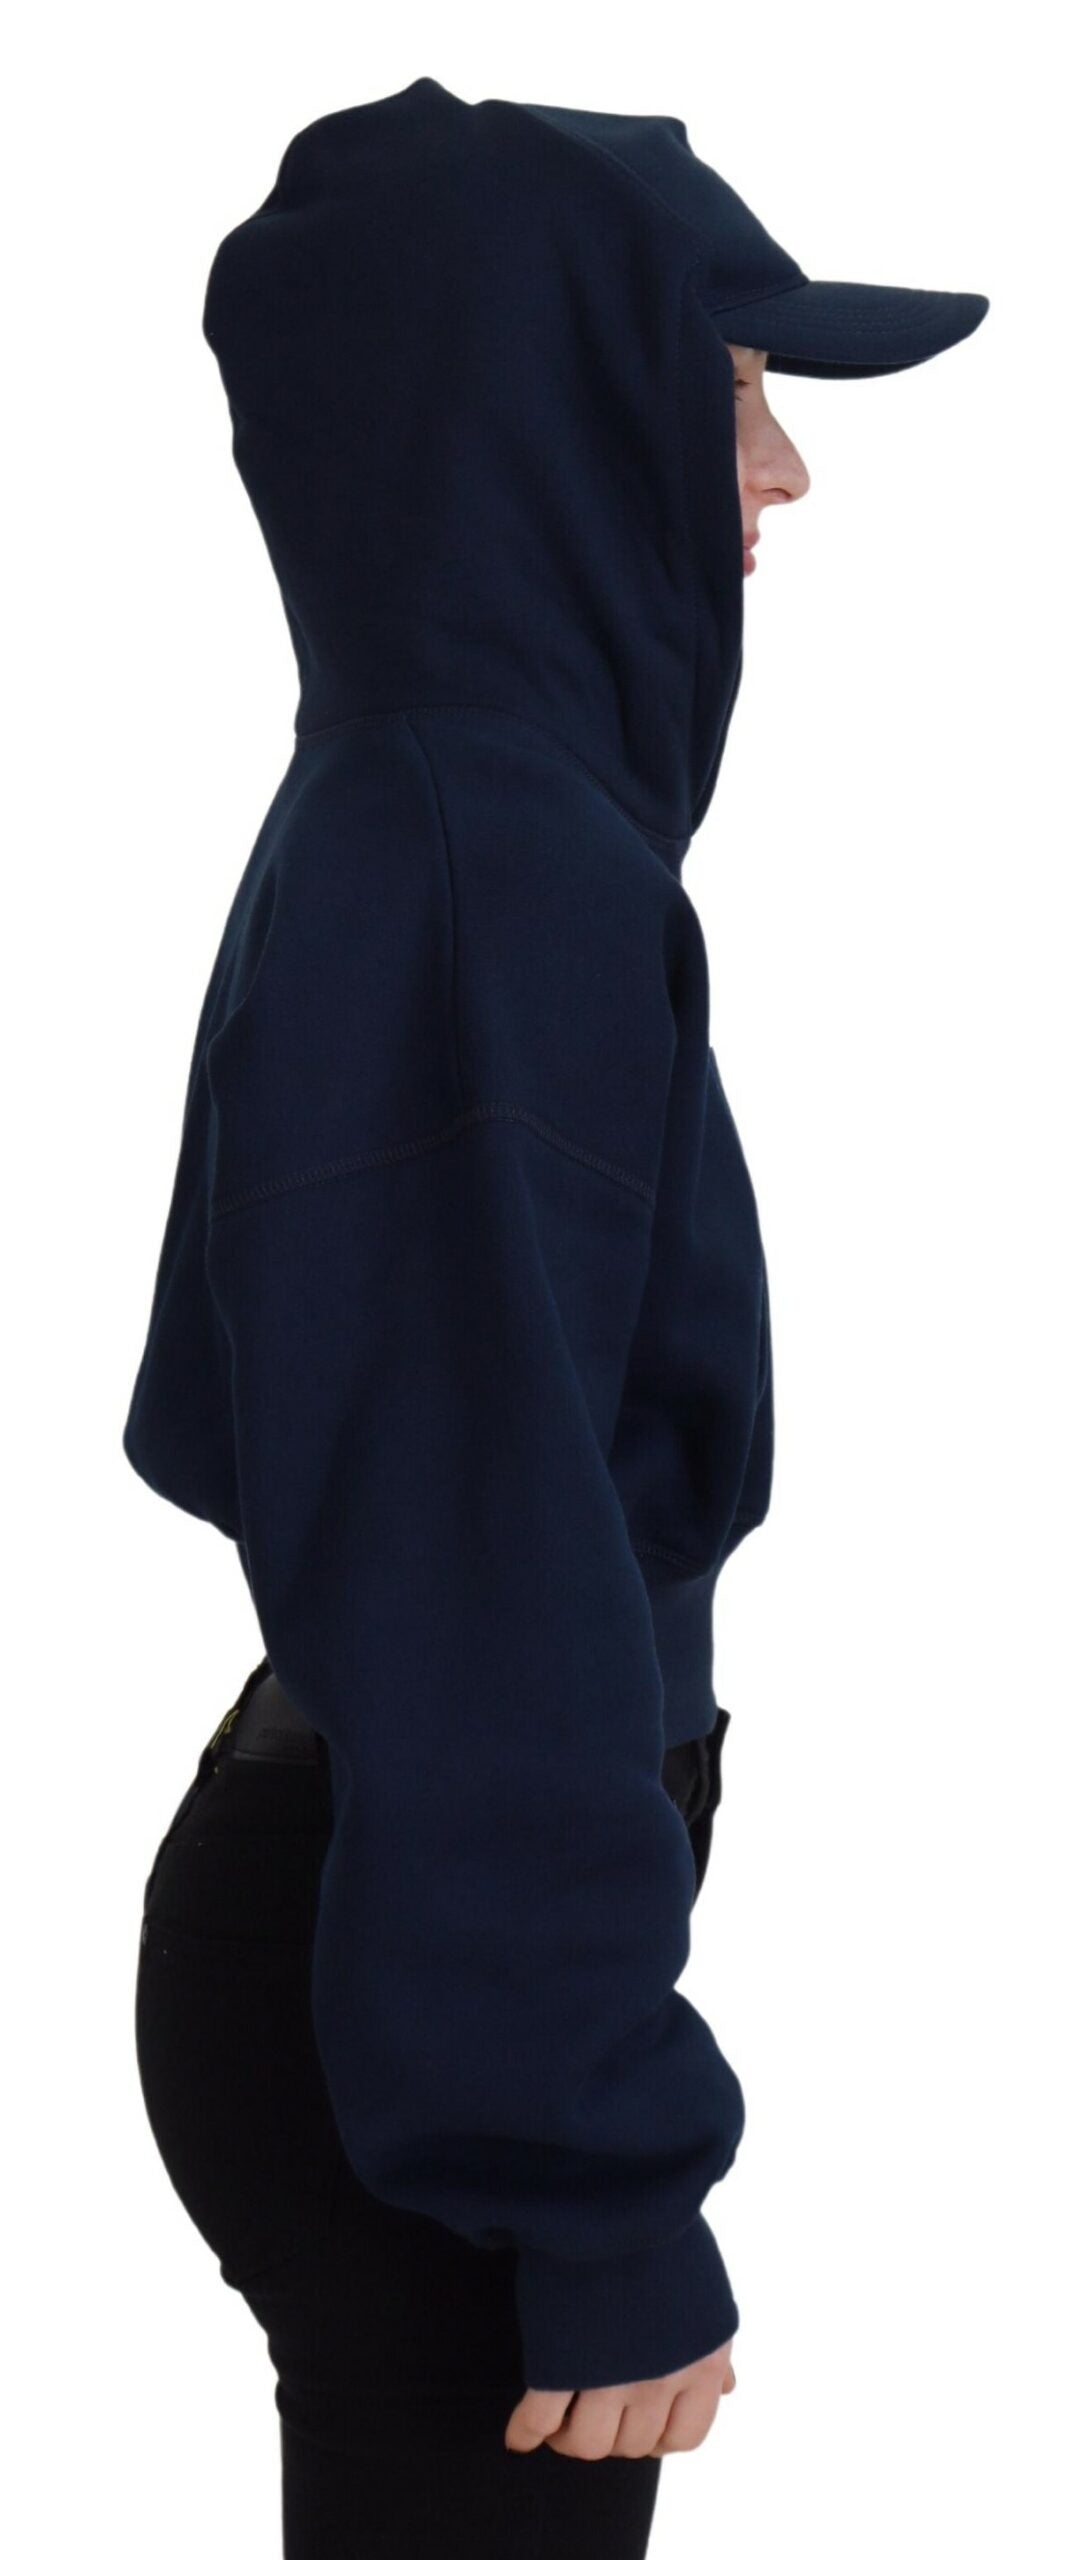 Blue Logo Print Hooded Cap Long Sleeve Sweater